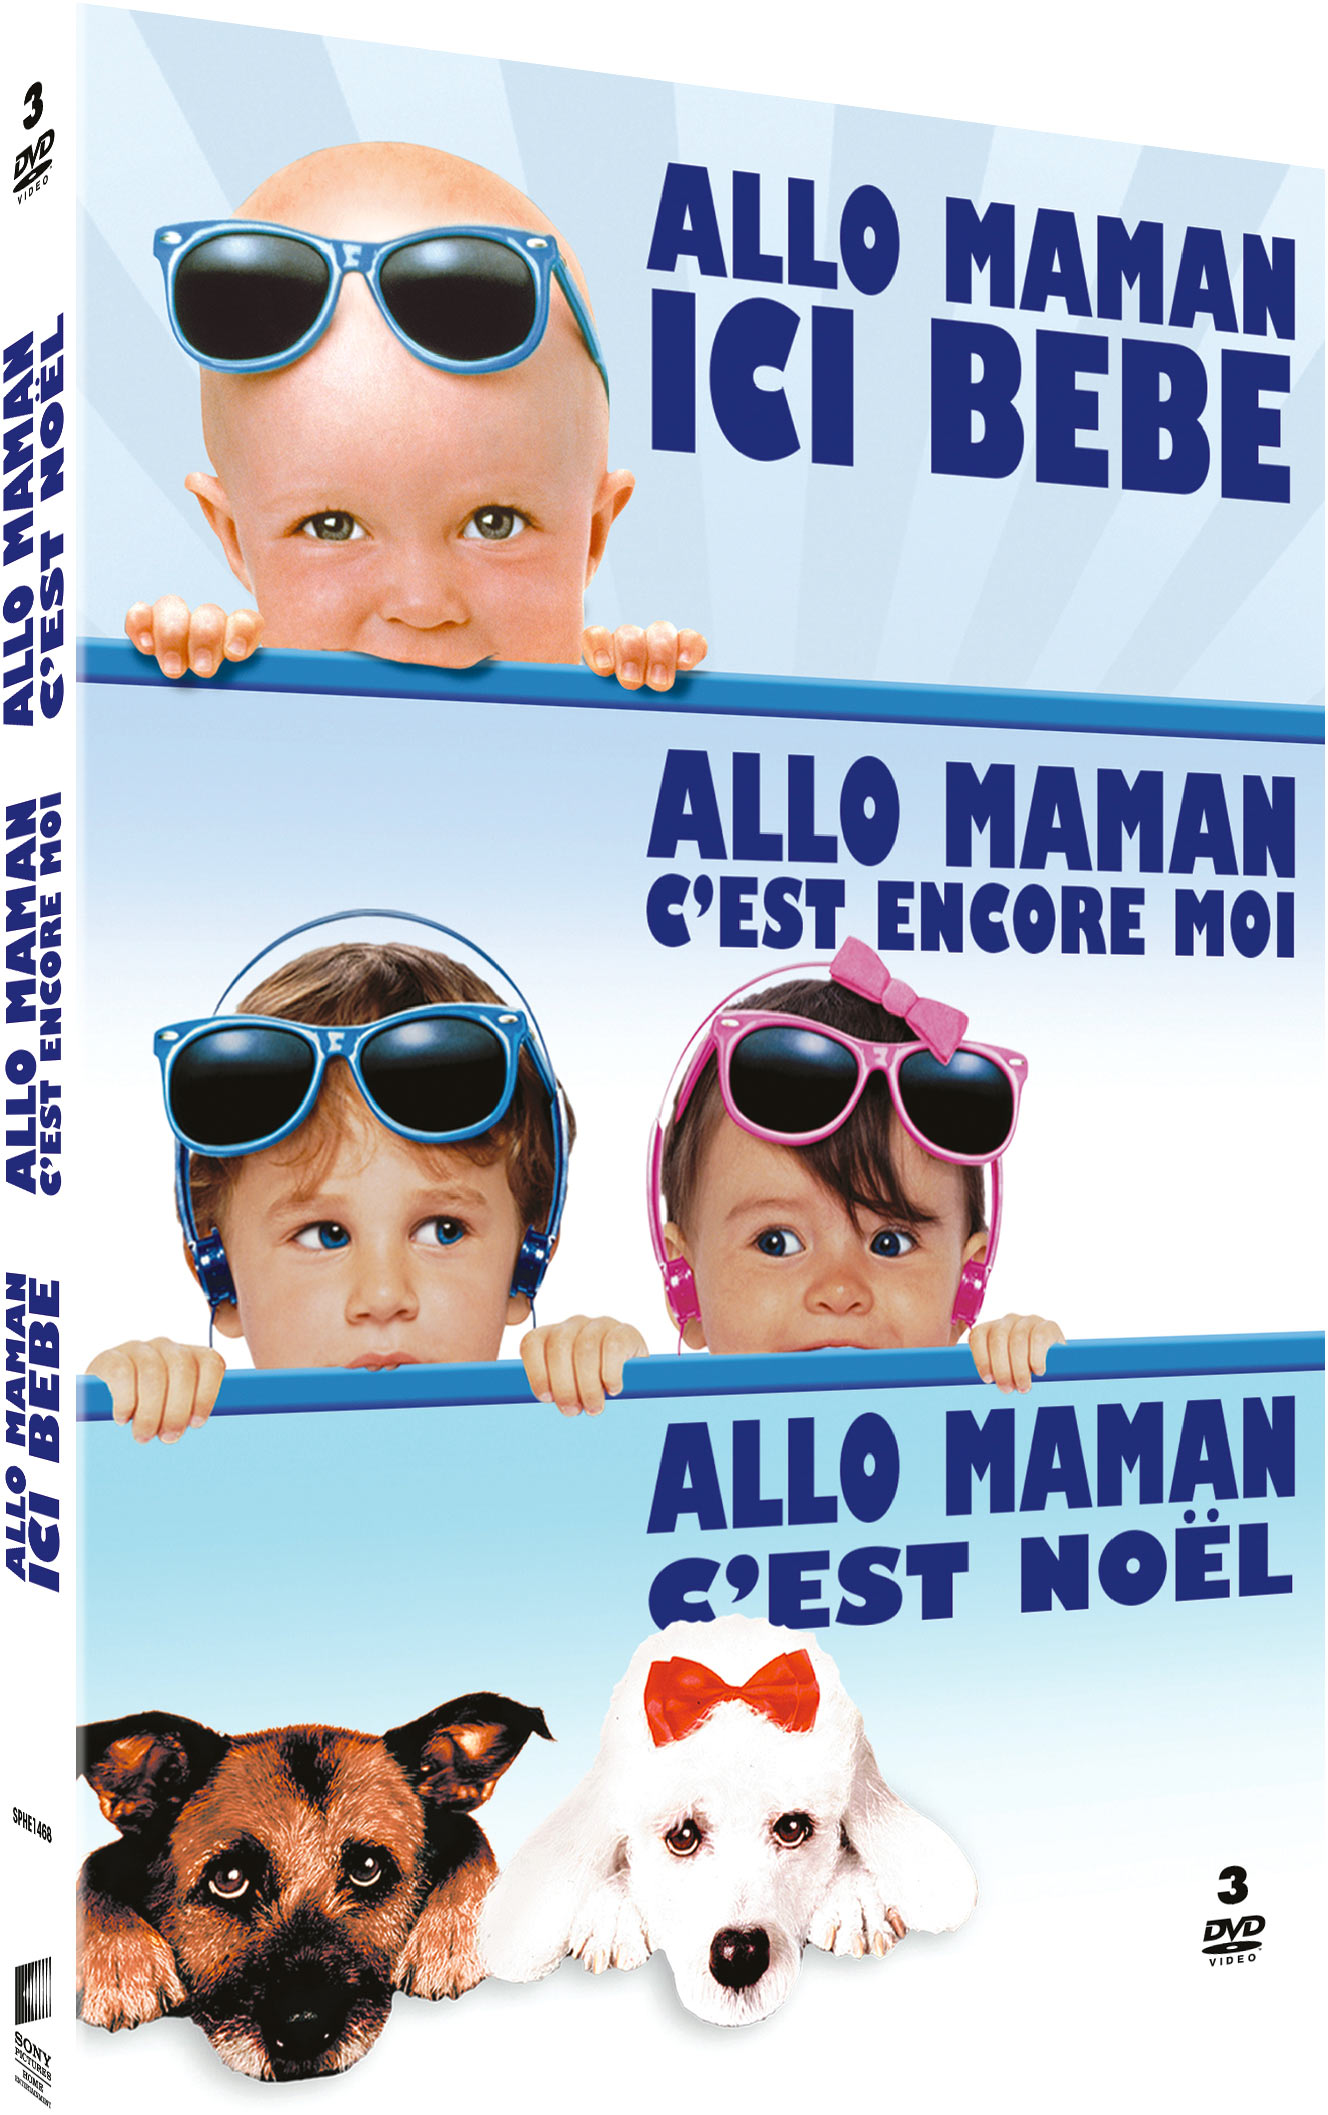 ALLO MAMAN ICI BEBE + ALLO MAMAN CEST ENCORE MOI + ALLO MAMAN CEST NOEL - 3 DVD